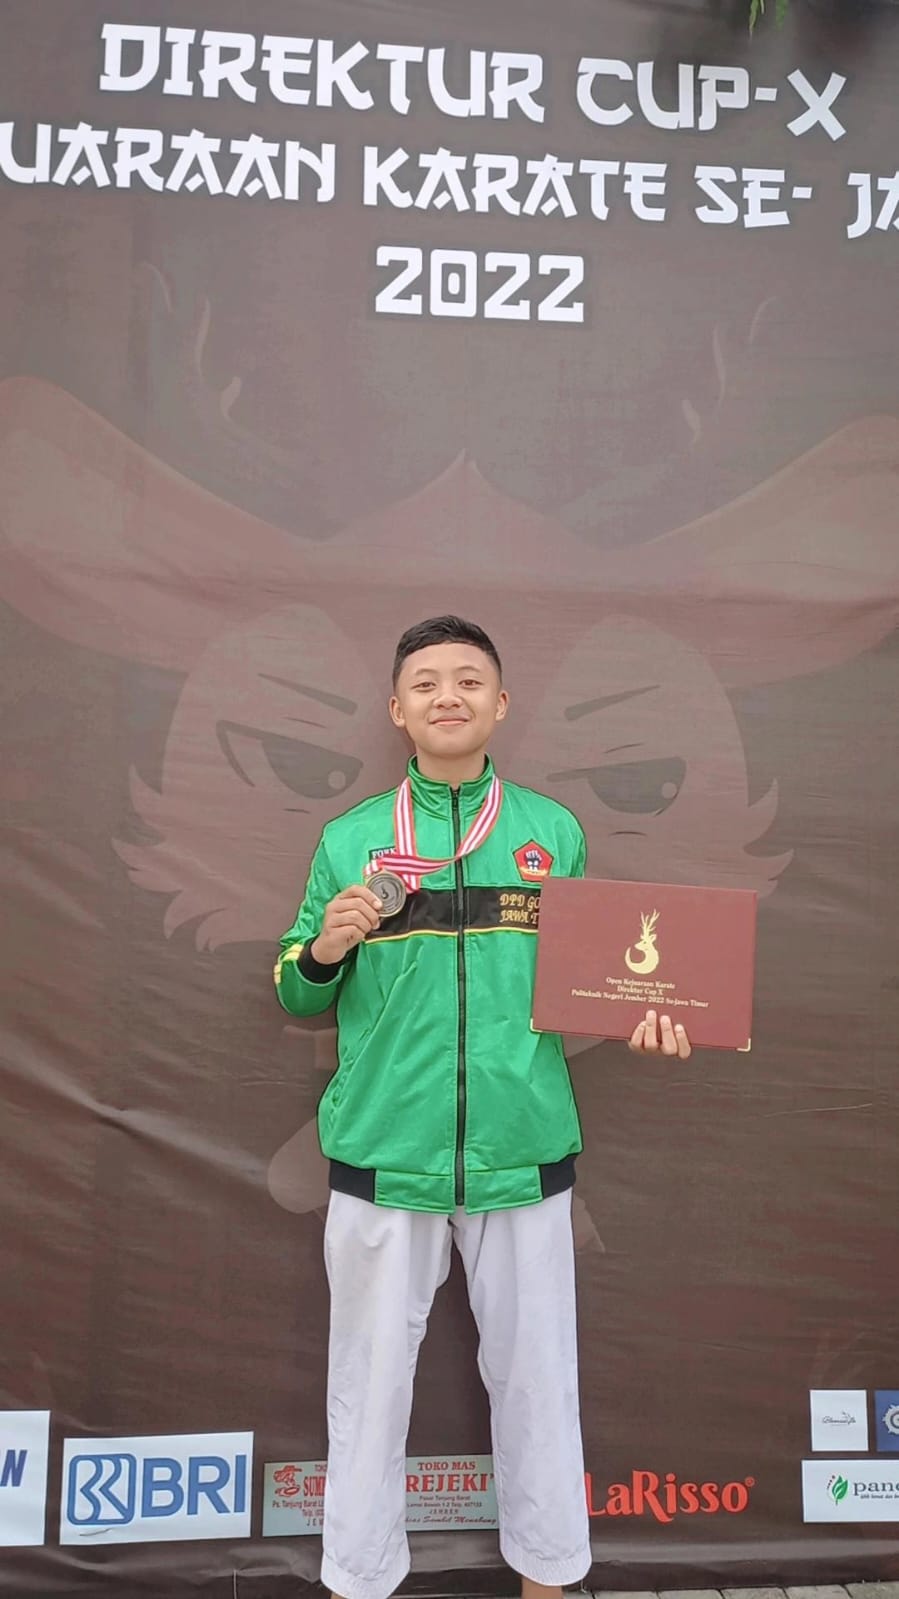 Alhamdulillah peserta didik SMA Baitul Arqom kembali menorehkan prestasi di Cabang Olahraga Kejuaraan Karate Direktur Cup X, atas nama Mahadma Rengga Marvelos, yang meraih Juara 2 kata perorangan se-Jawa Timur yg diselenggarakan  di Politeknik Negeri Jember pada hari Sabtu,06 Agustus 2022